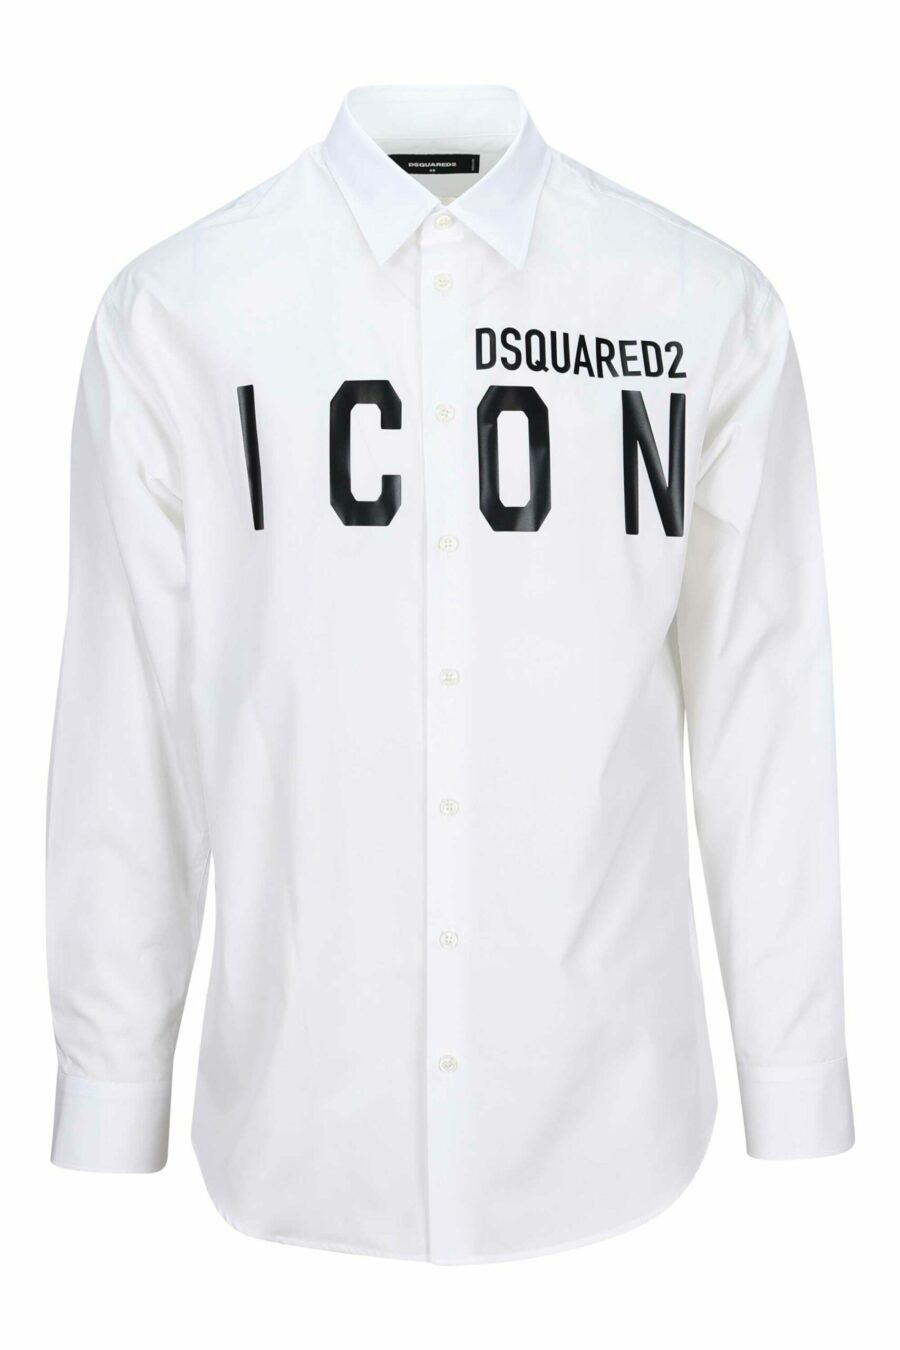 White shirt with maxilogo "icon" - 8052134107577 scaled